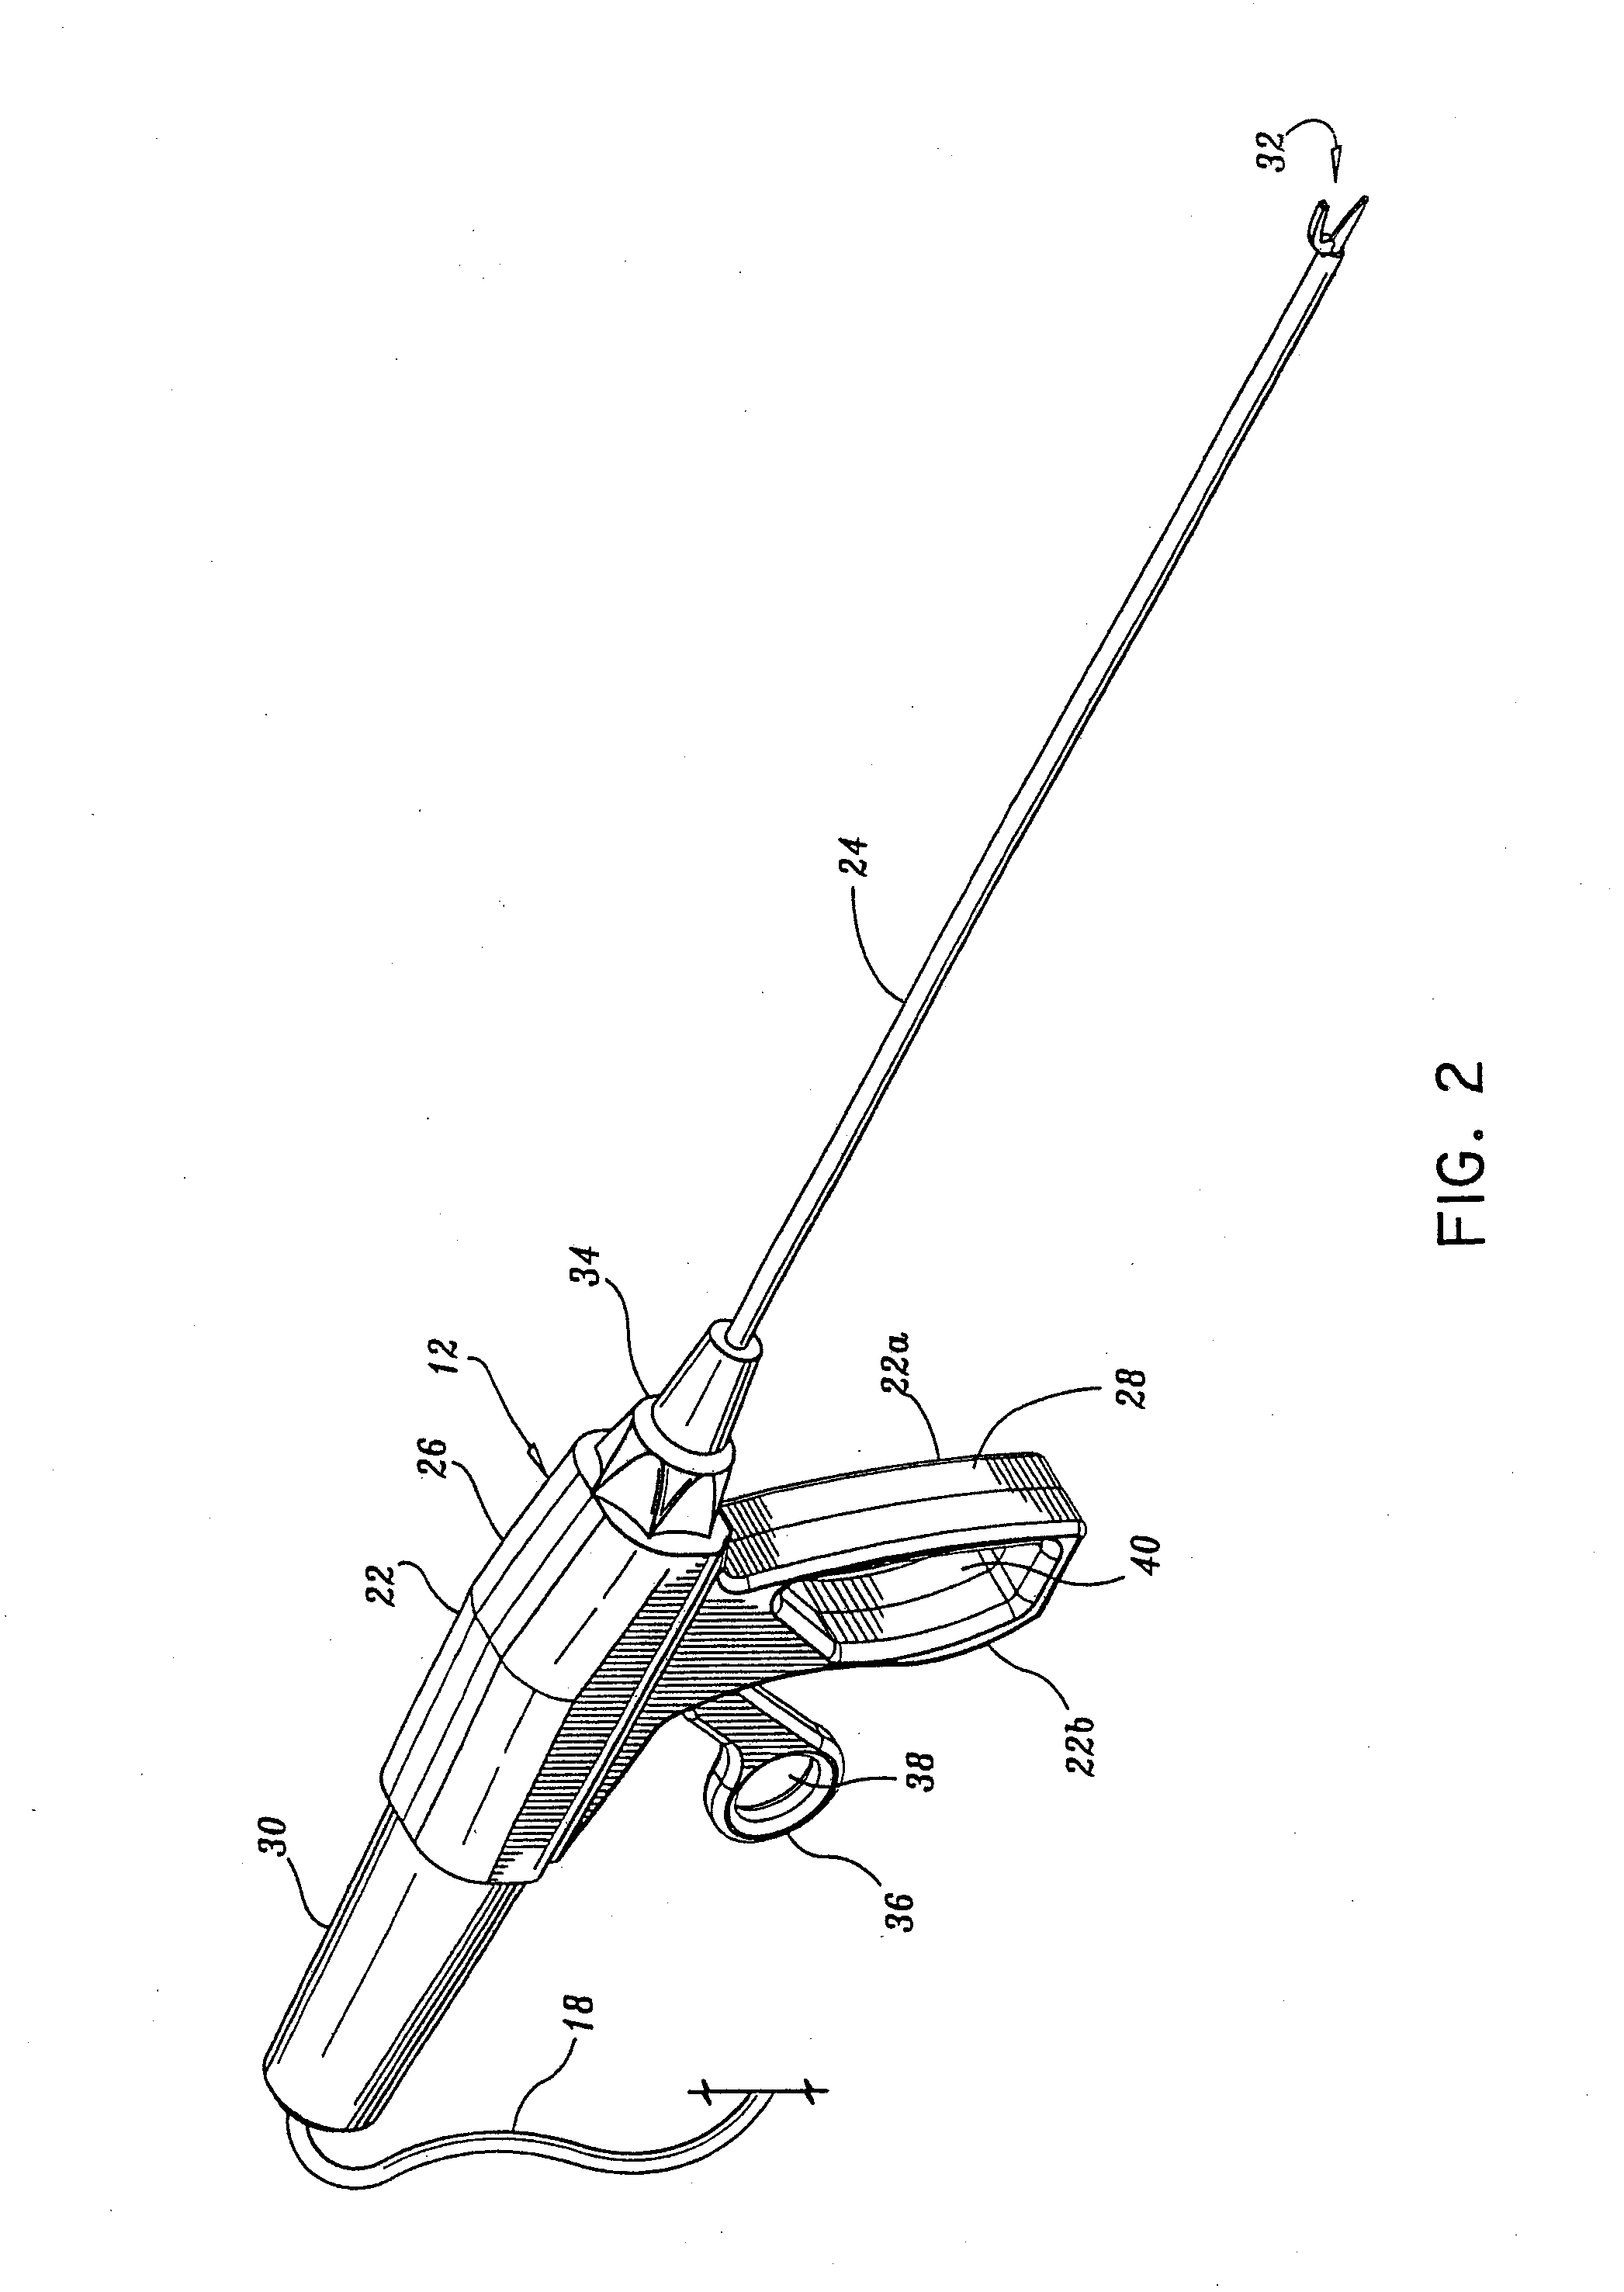 Ultrasonic curved blade